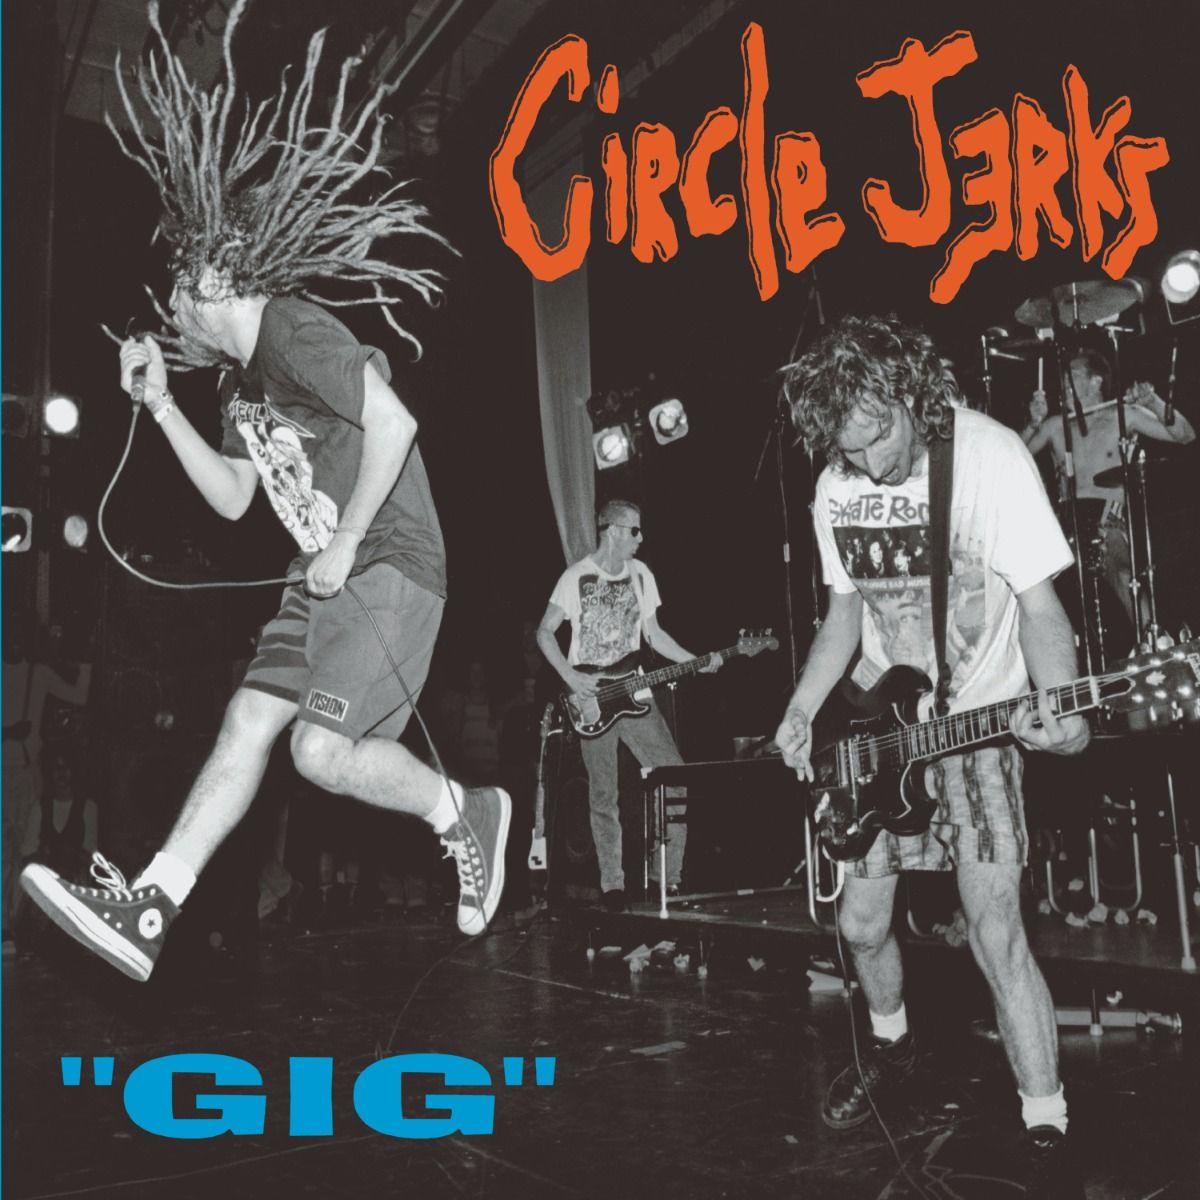 Circle Jerks "Gig" LP (RSD 2018)